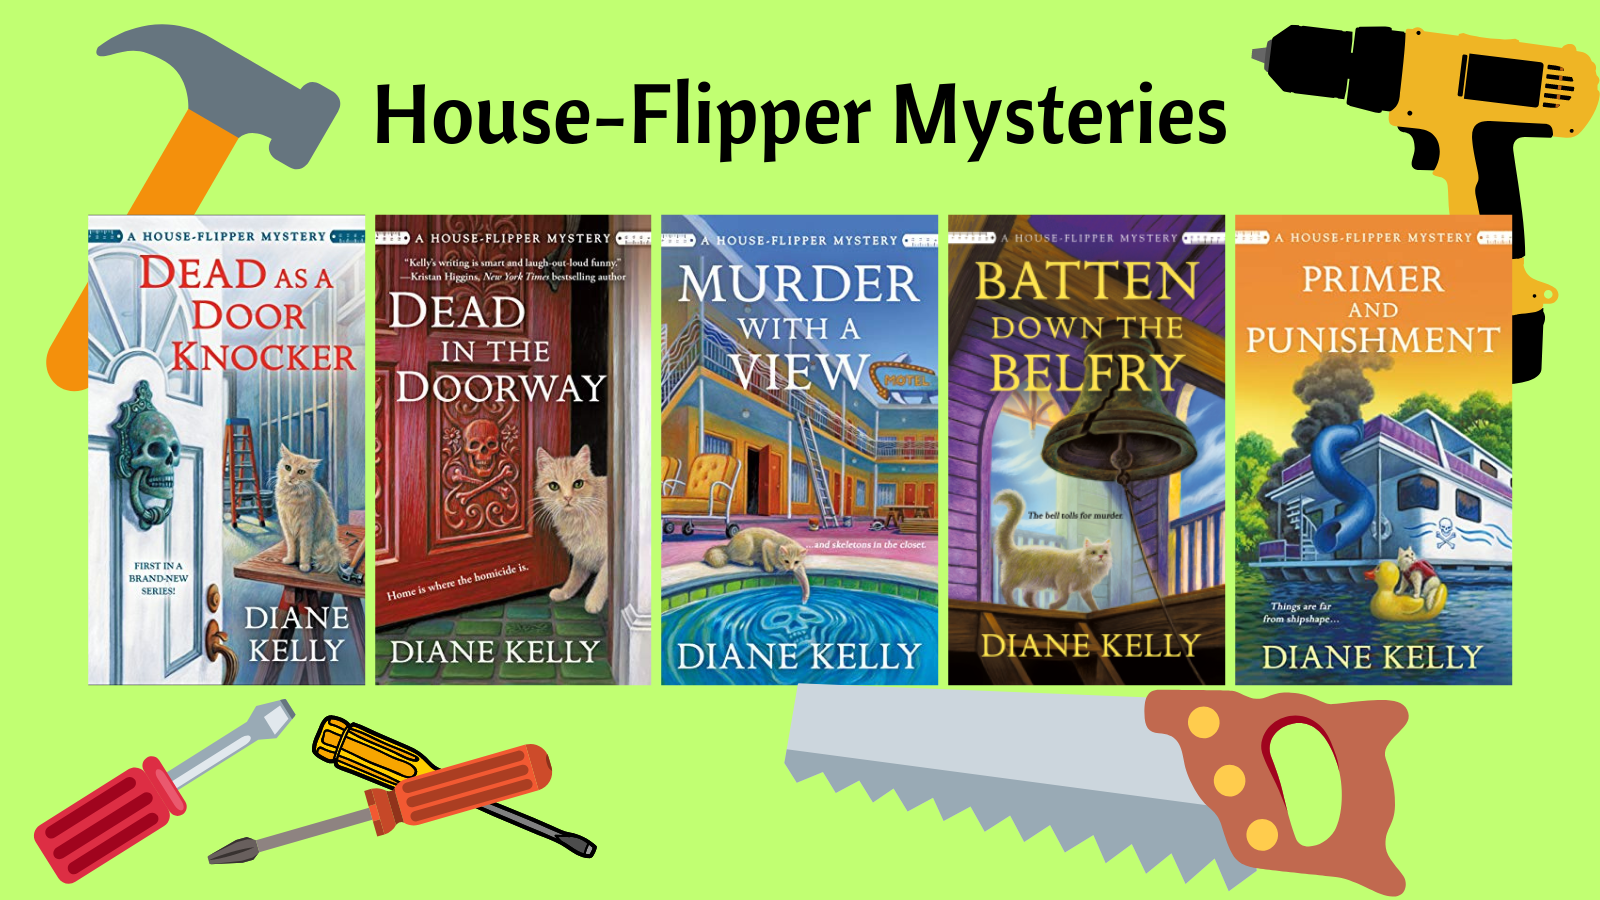 House-Flipper Mysteries